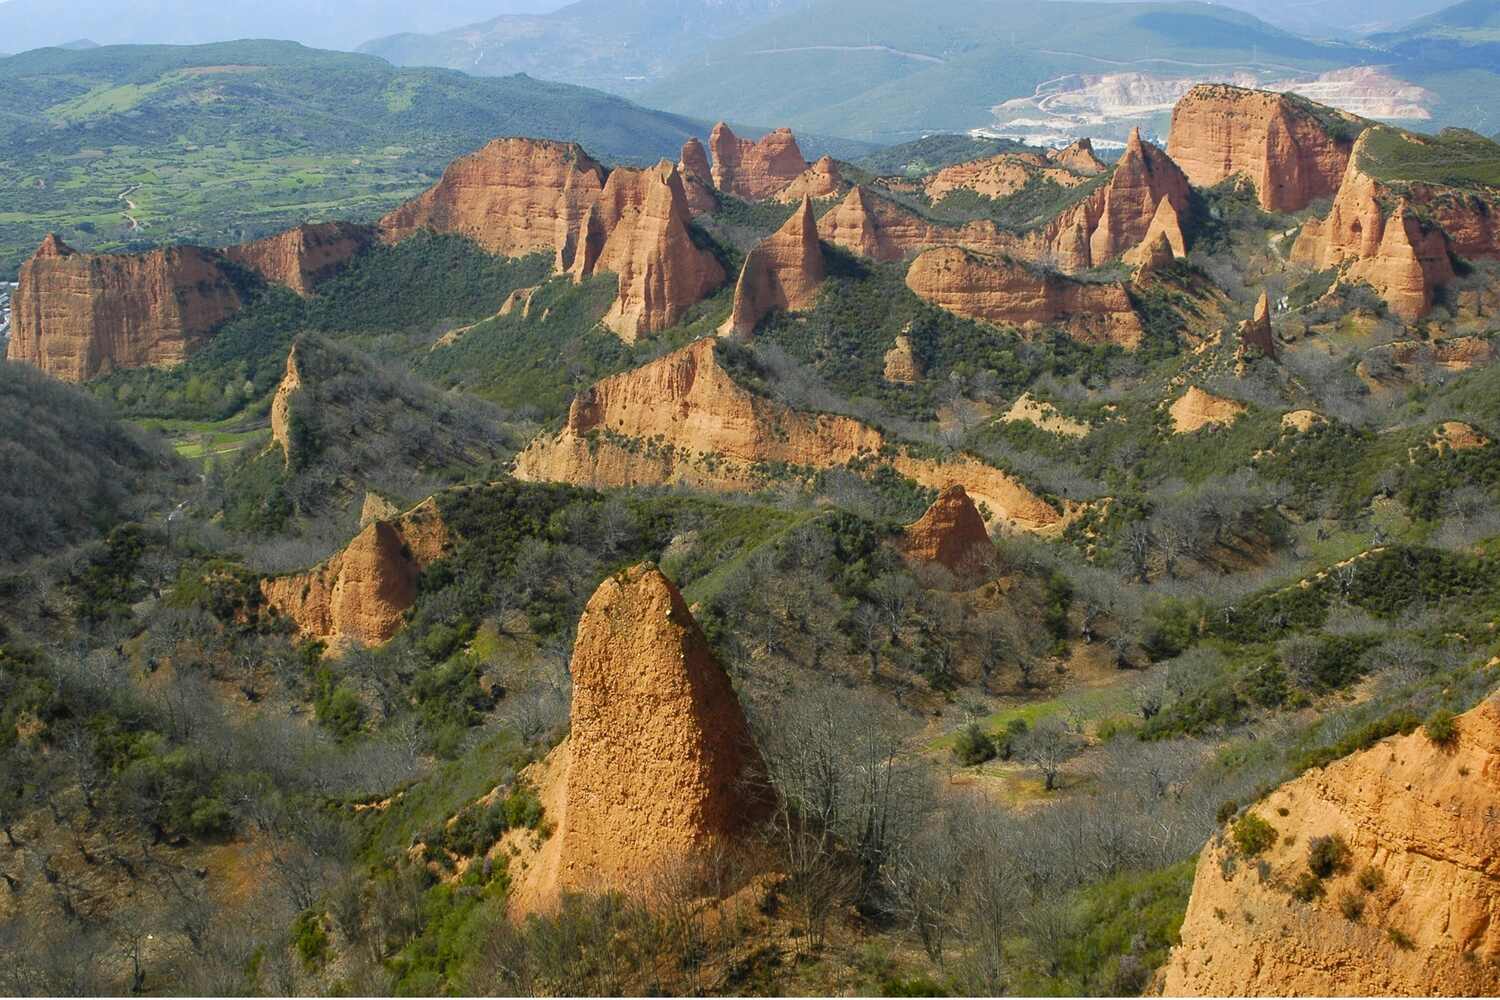 Las Médulas historic landscape with ancient Roman gold mining remnants in Spain.